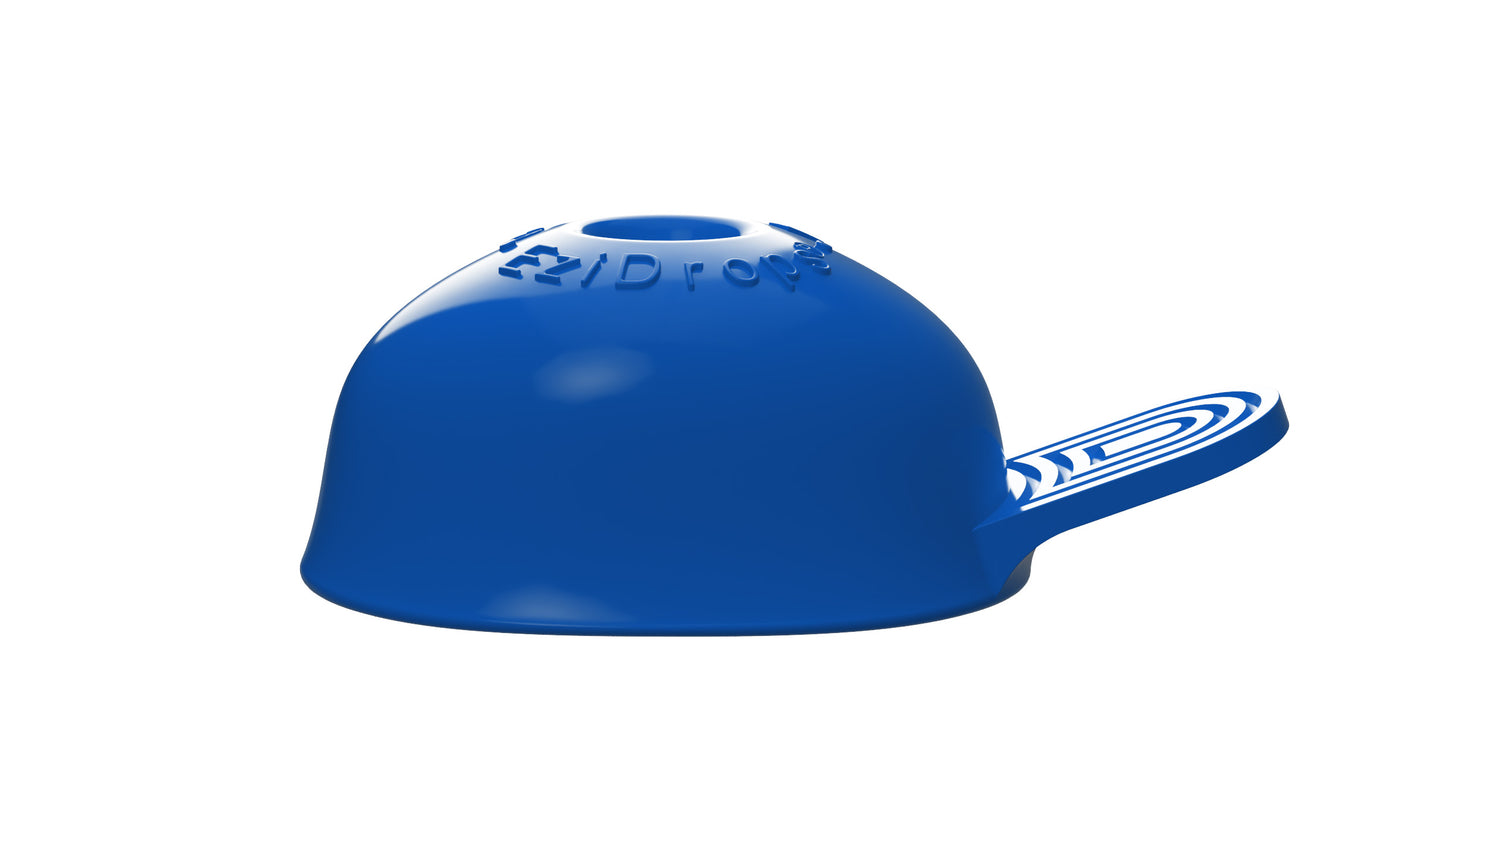 Blue EziDrops - Eye drop dispenser aid